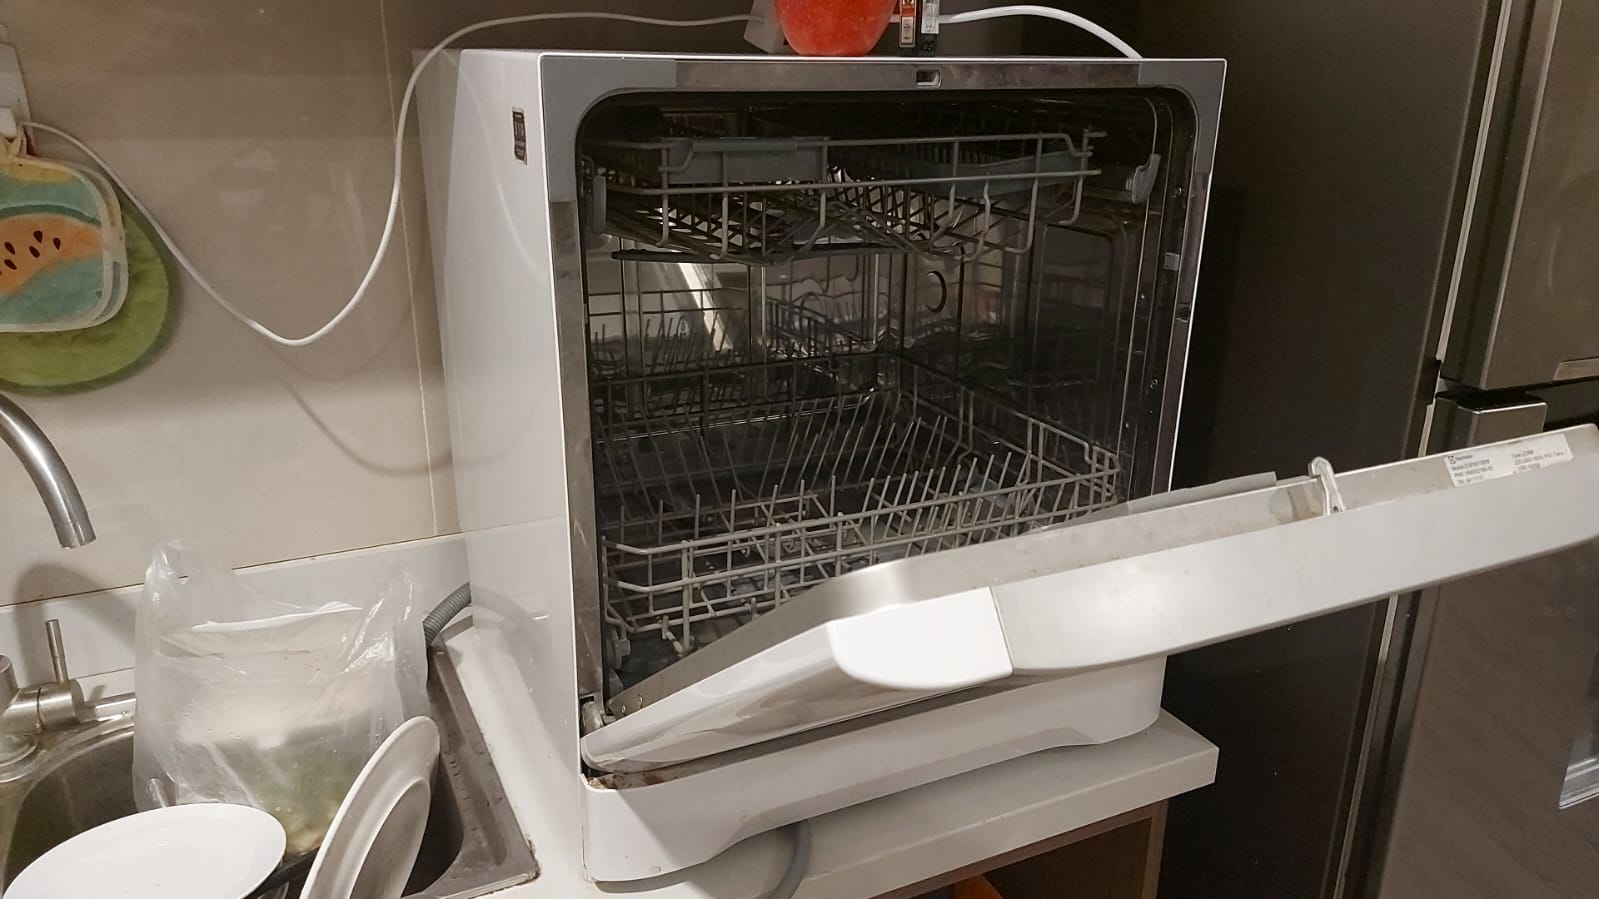 Home appliance repair - dish washer